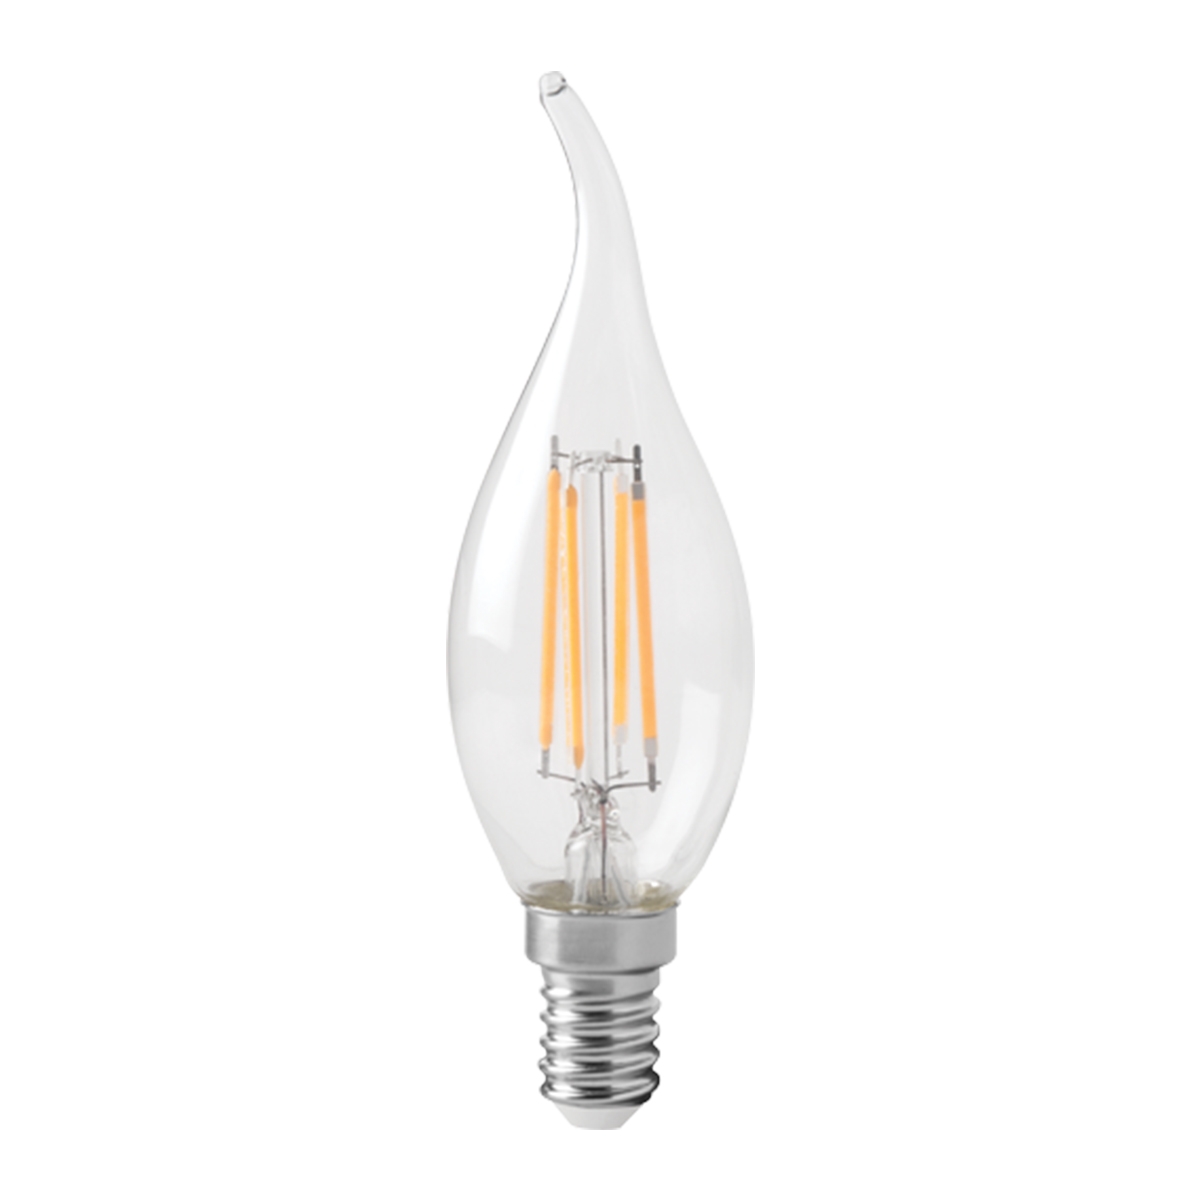 Megaman E14 LED Candle Filament TP Bulb LC2204.8 4.8W - 2700K Warm White 